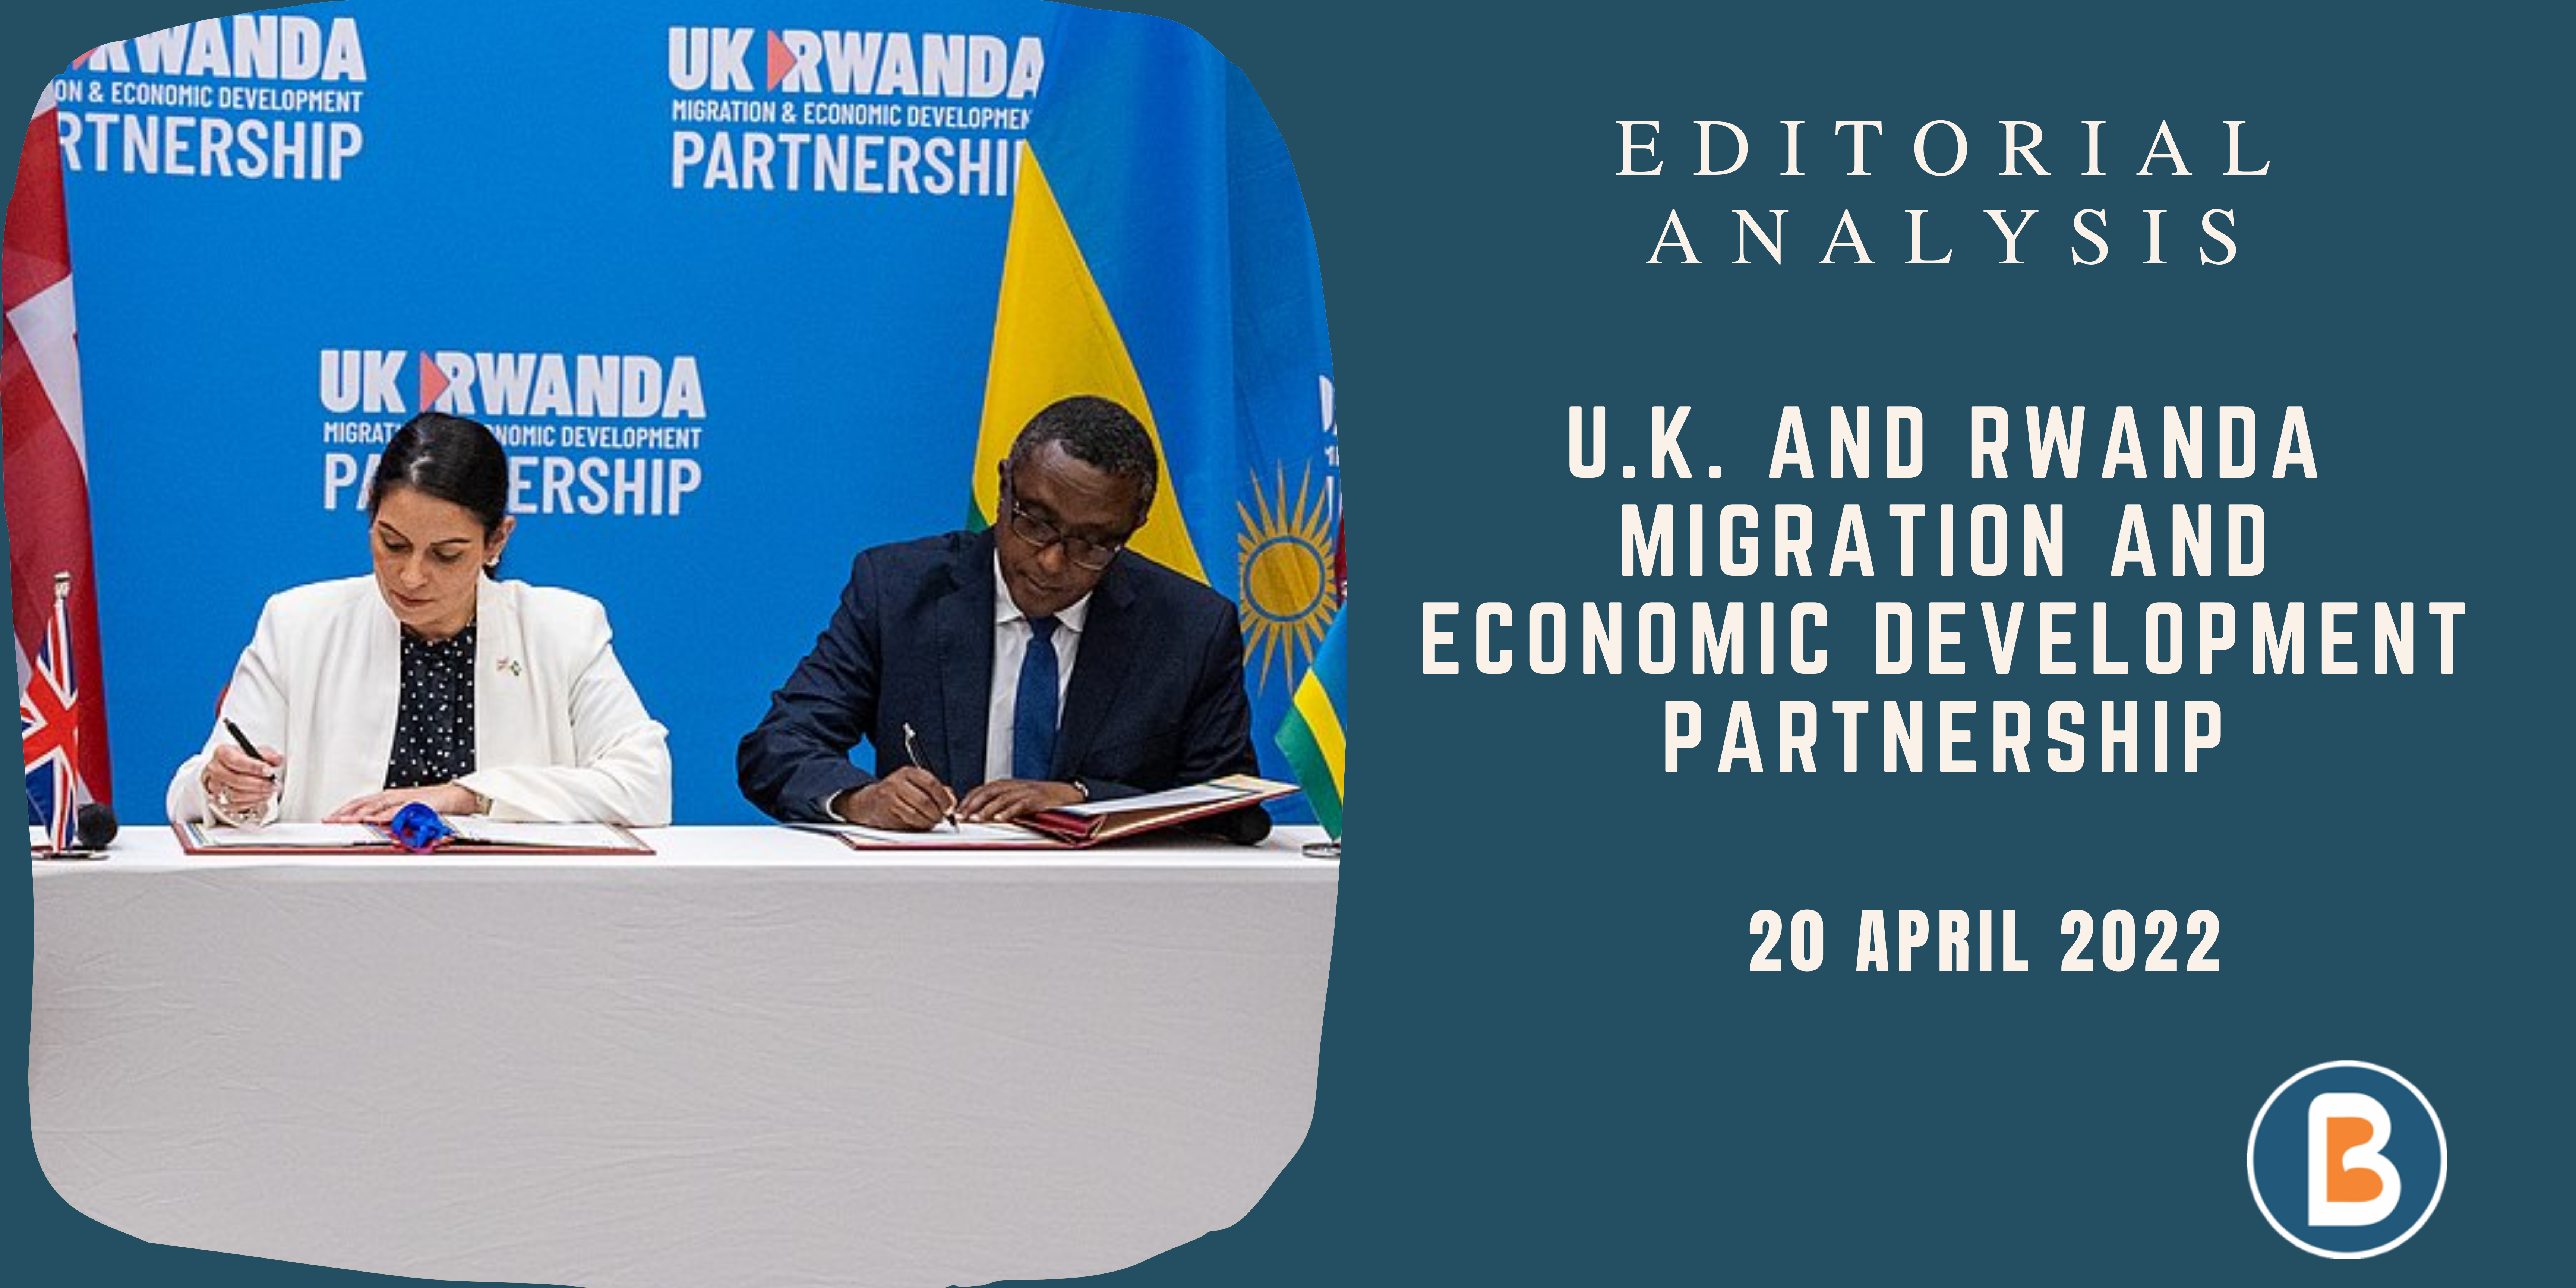 Editorial Analysis for IAS - U.K. and Rwanda Migration and Economic Development Partnership